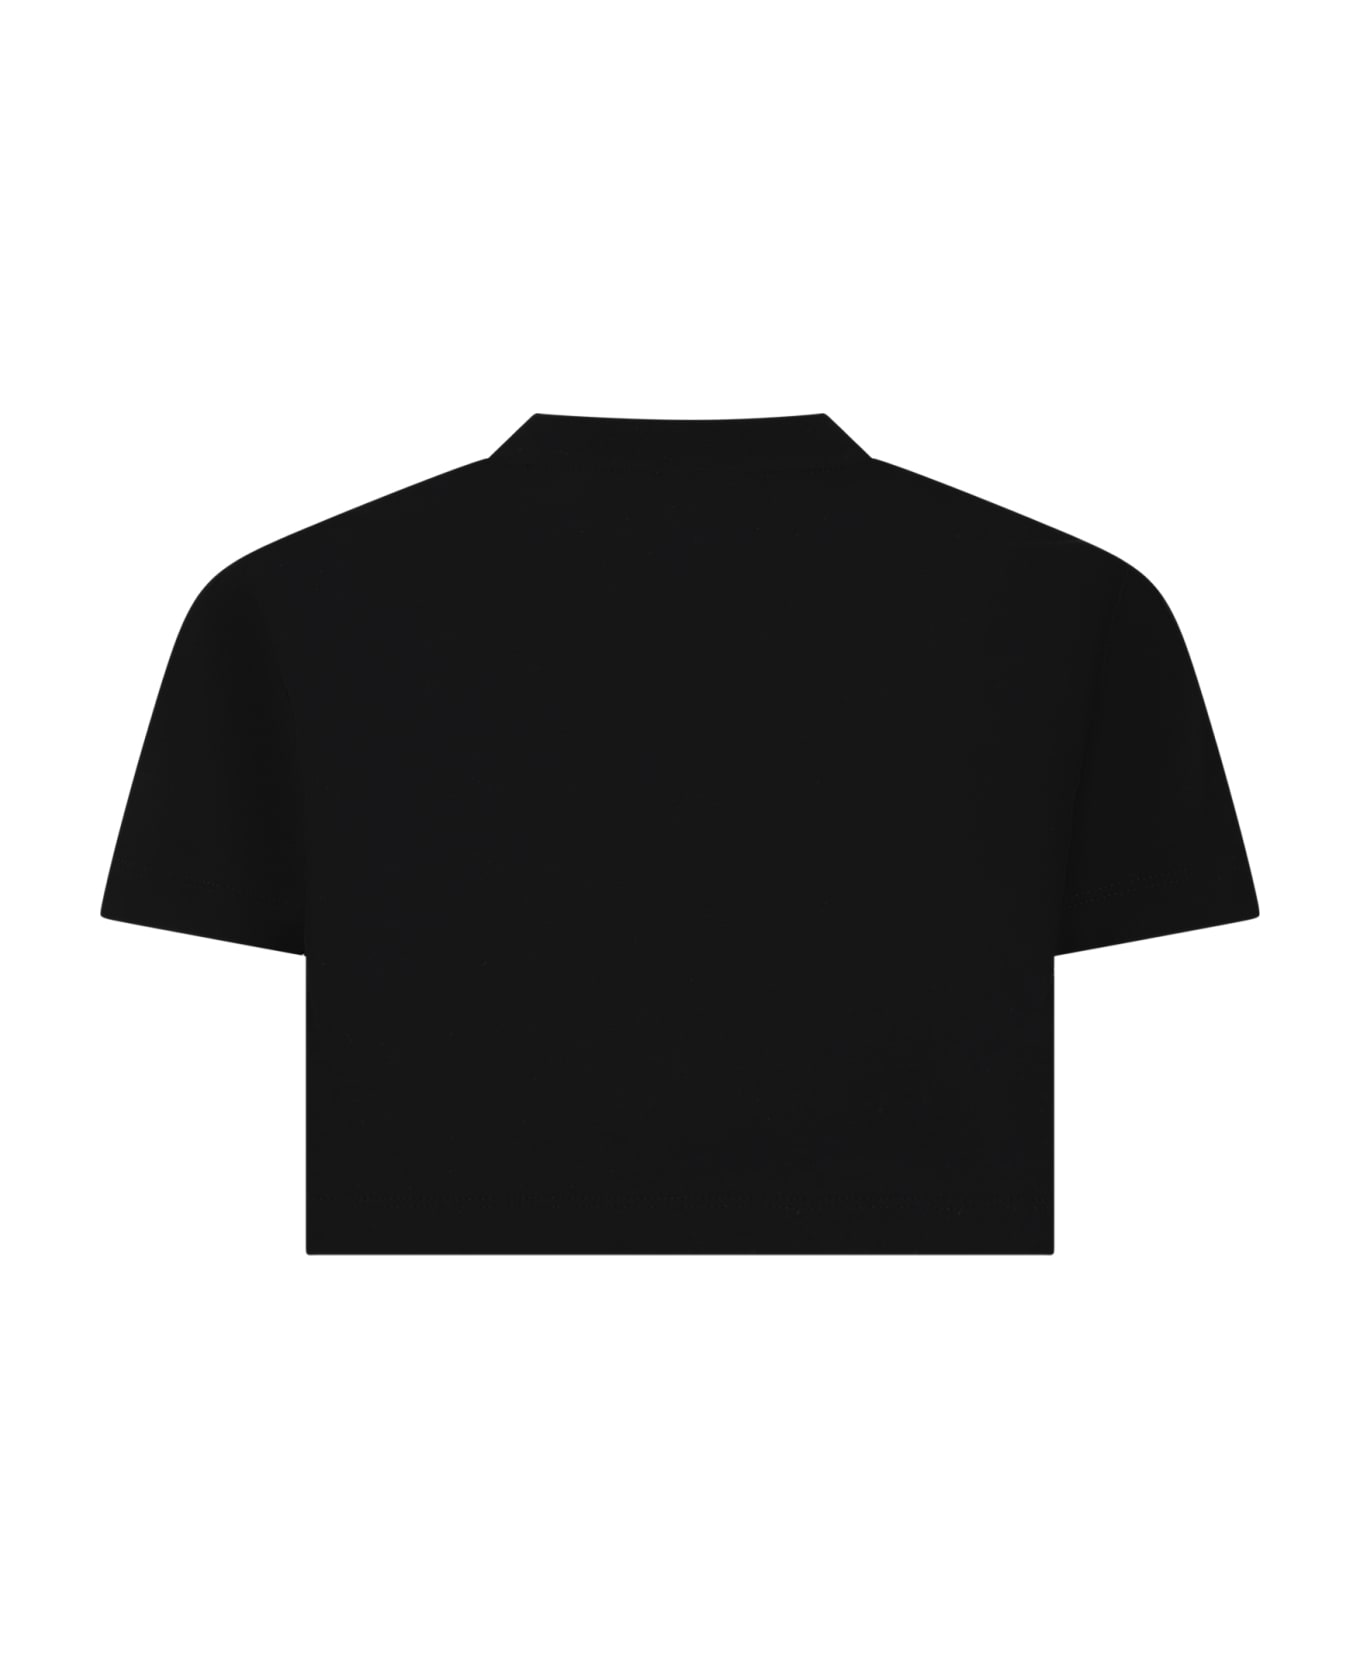 Fendi Black T-shirt For Girl With Logo - Nero